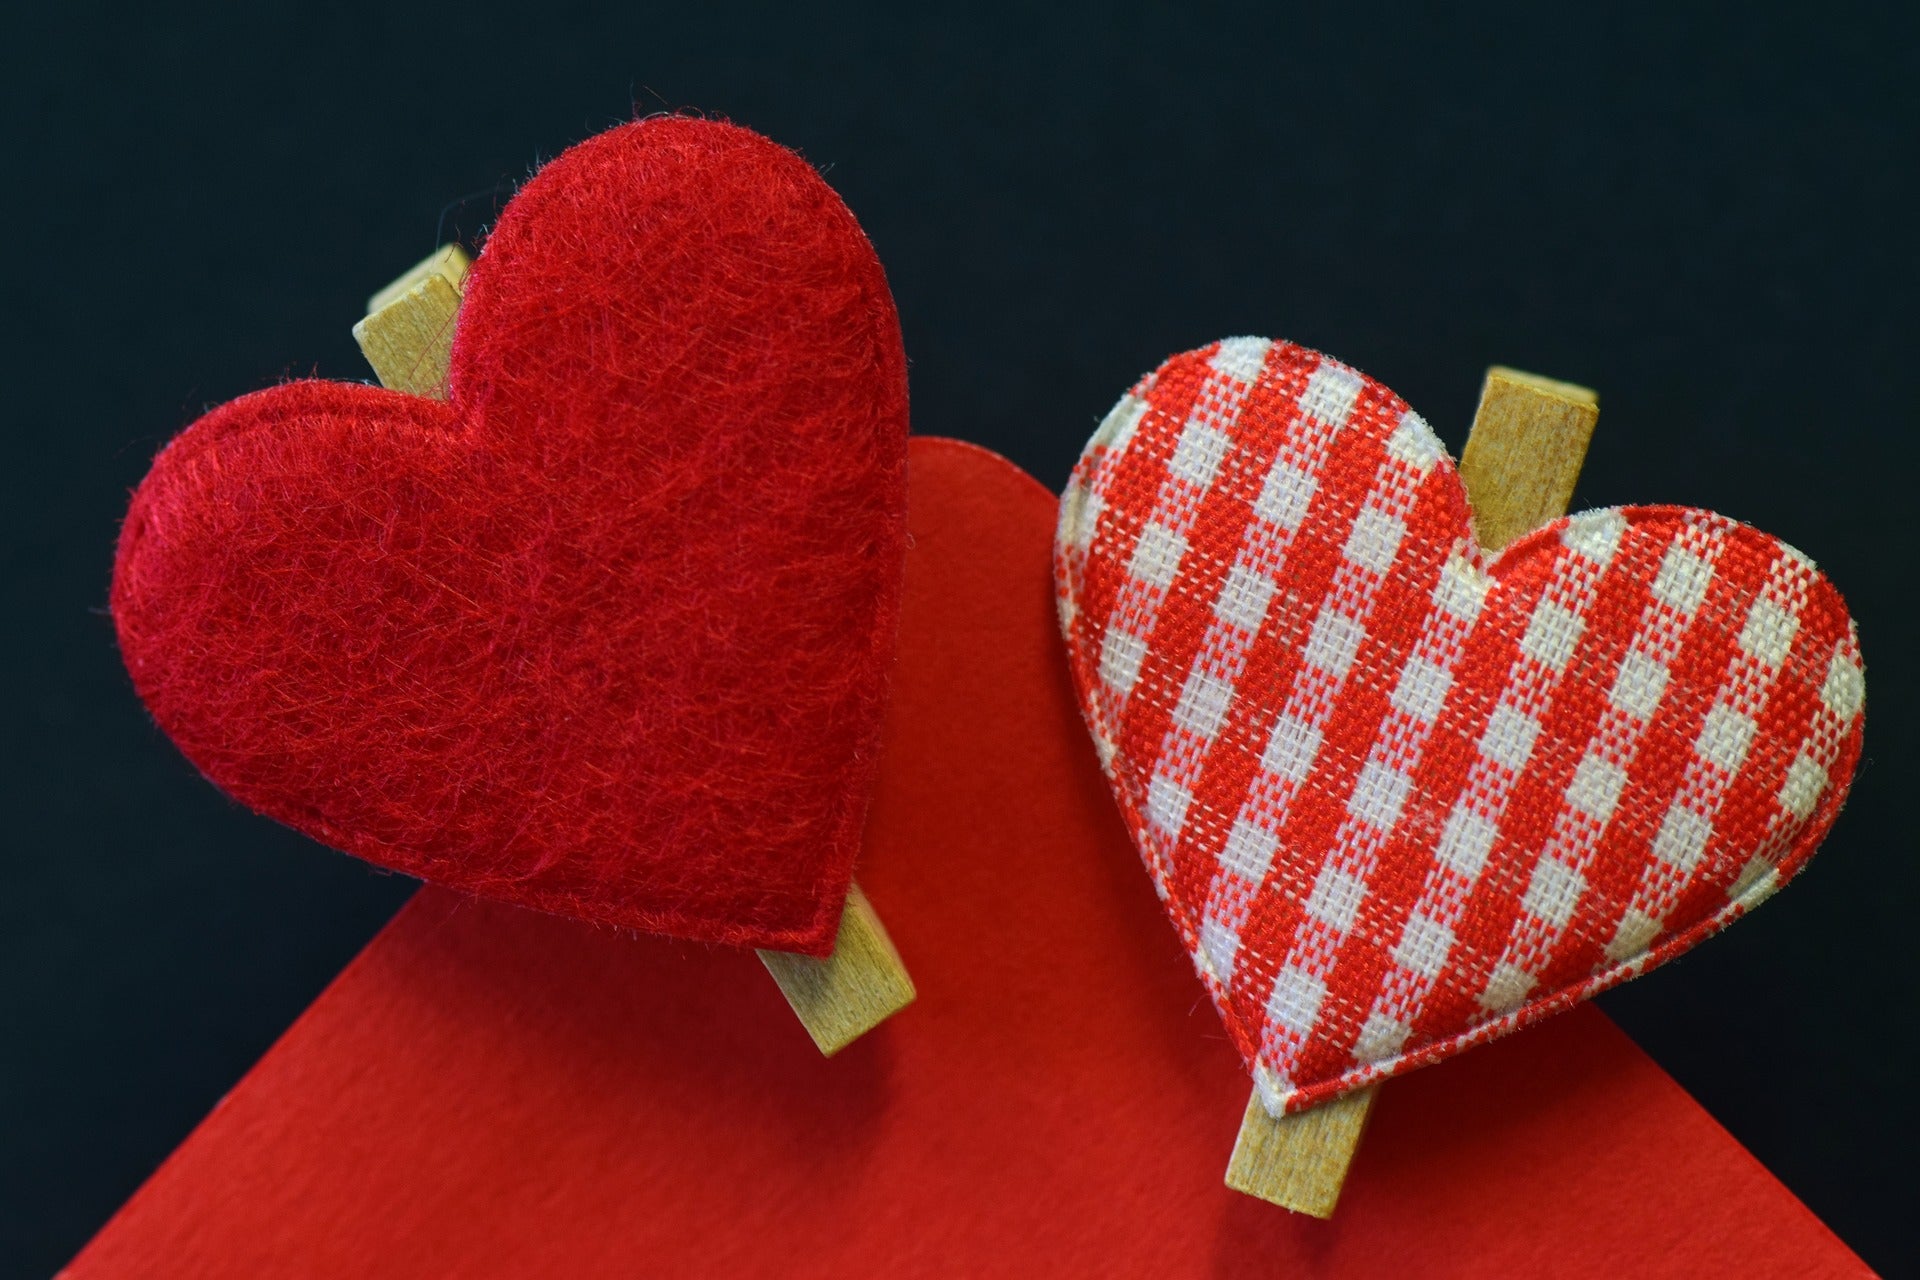 Caja para regalos de San Valentin - Manualidades para todos 